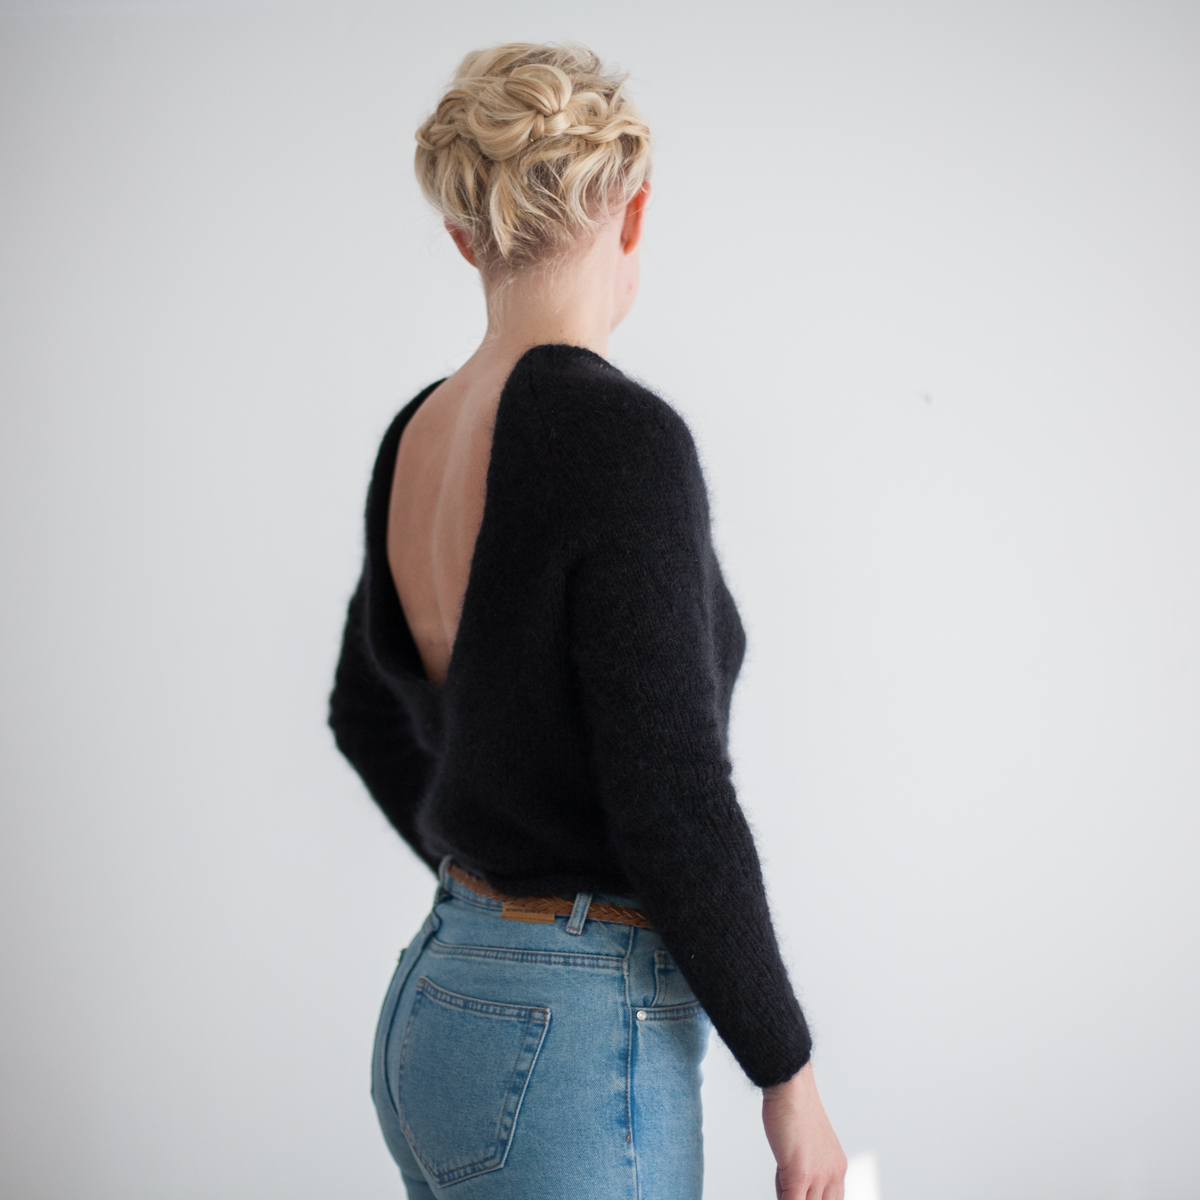  - Freya Sweater | V back sweater knitting pattern - by HipKnitShop - 28/08/2018